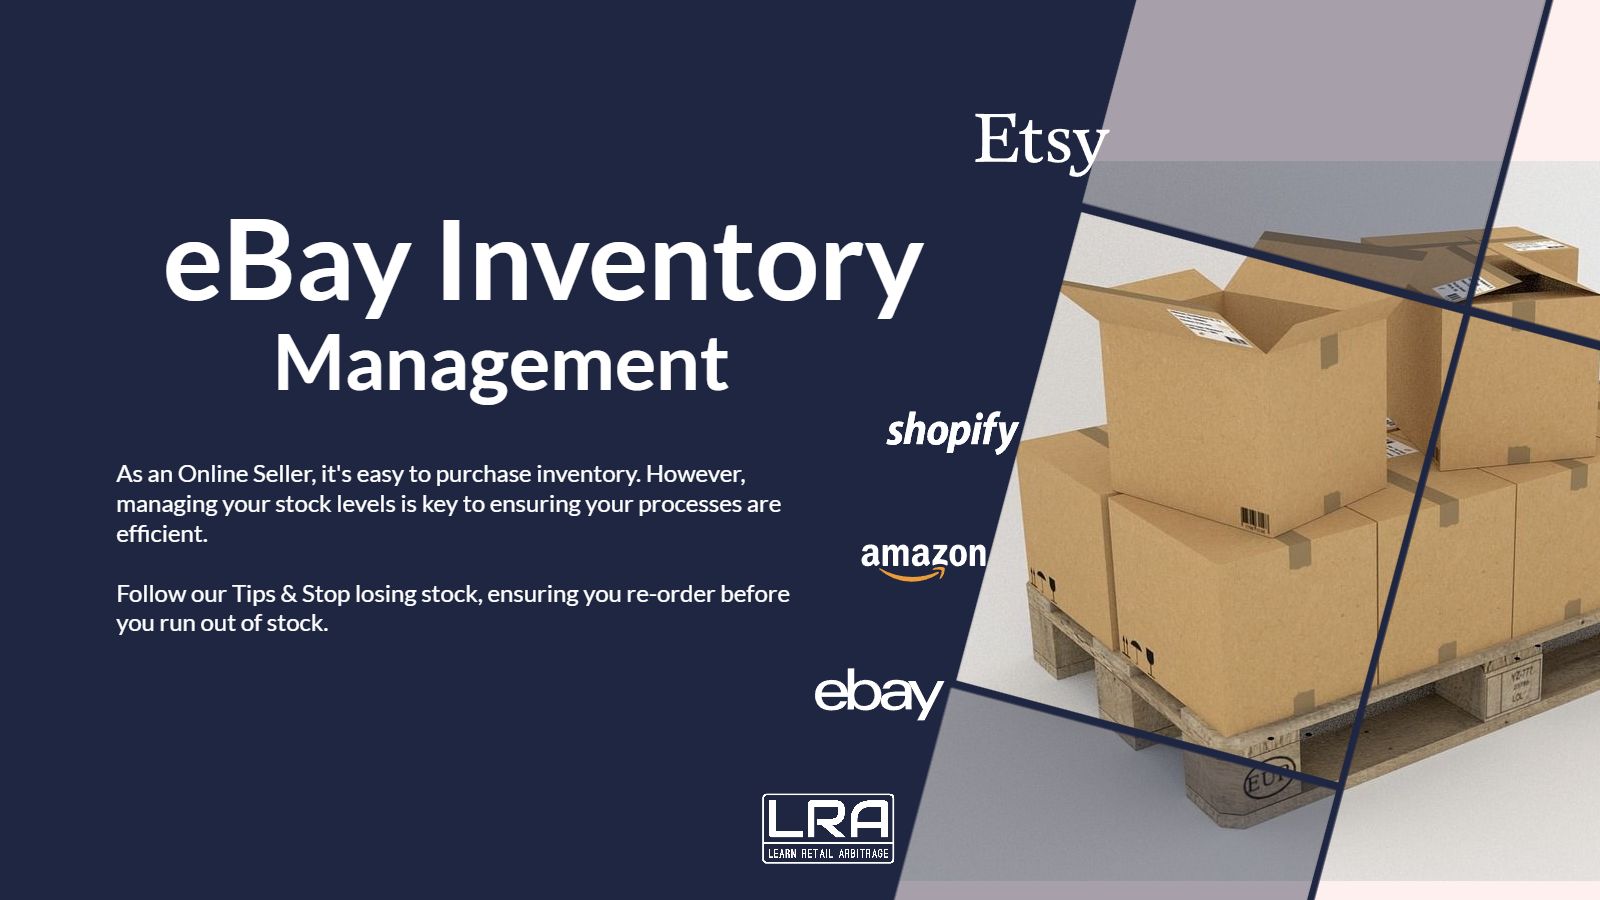 eBay Inventory management tips